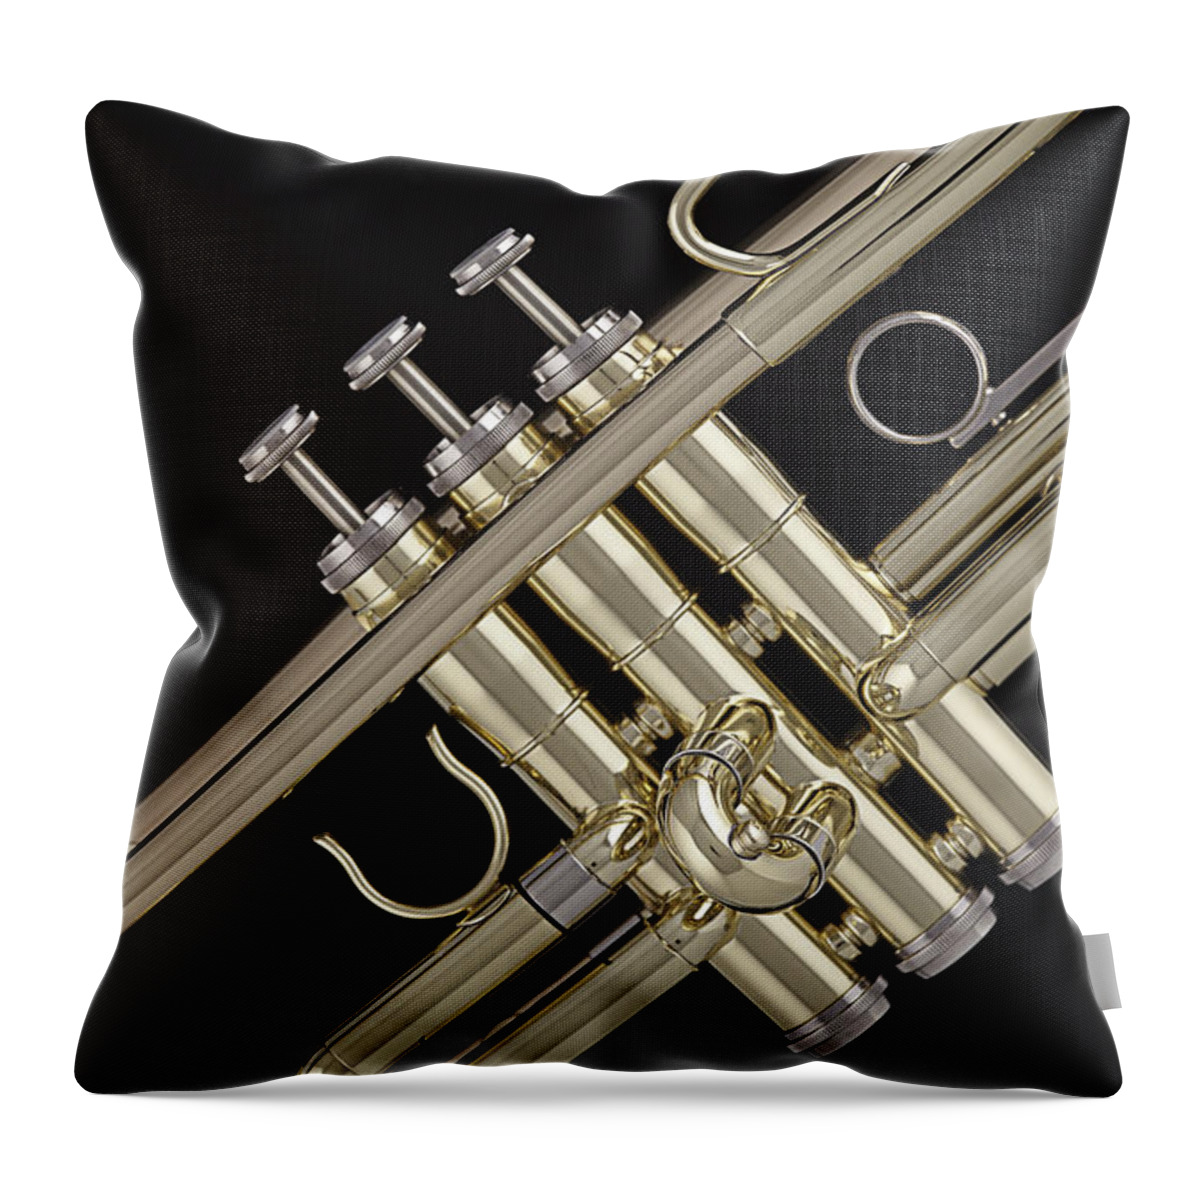 Fine Art Throw Pillow featuring the photograph Sharp Trumpet on Black by M K Miller